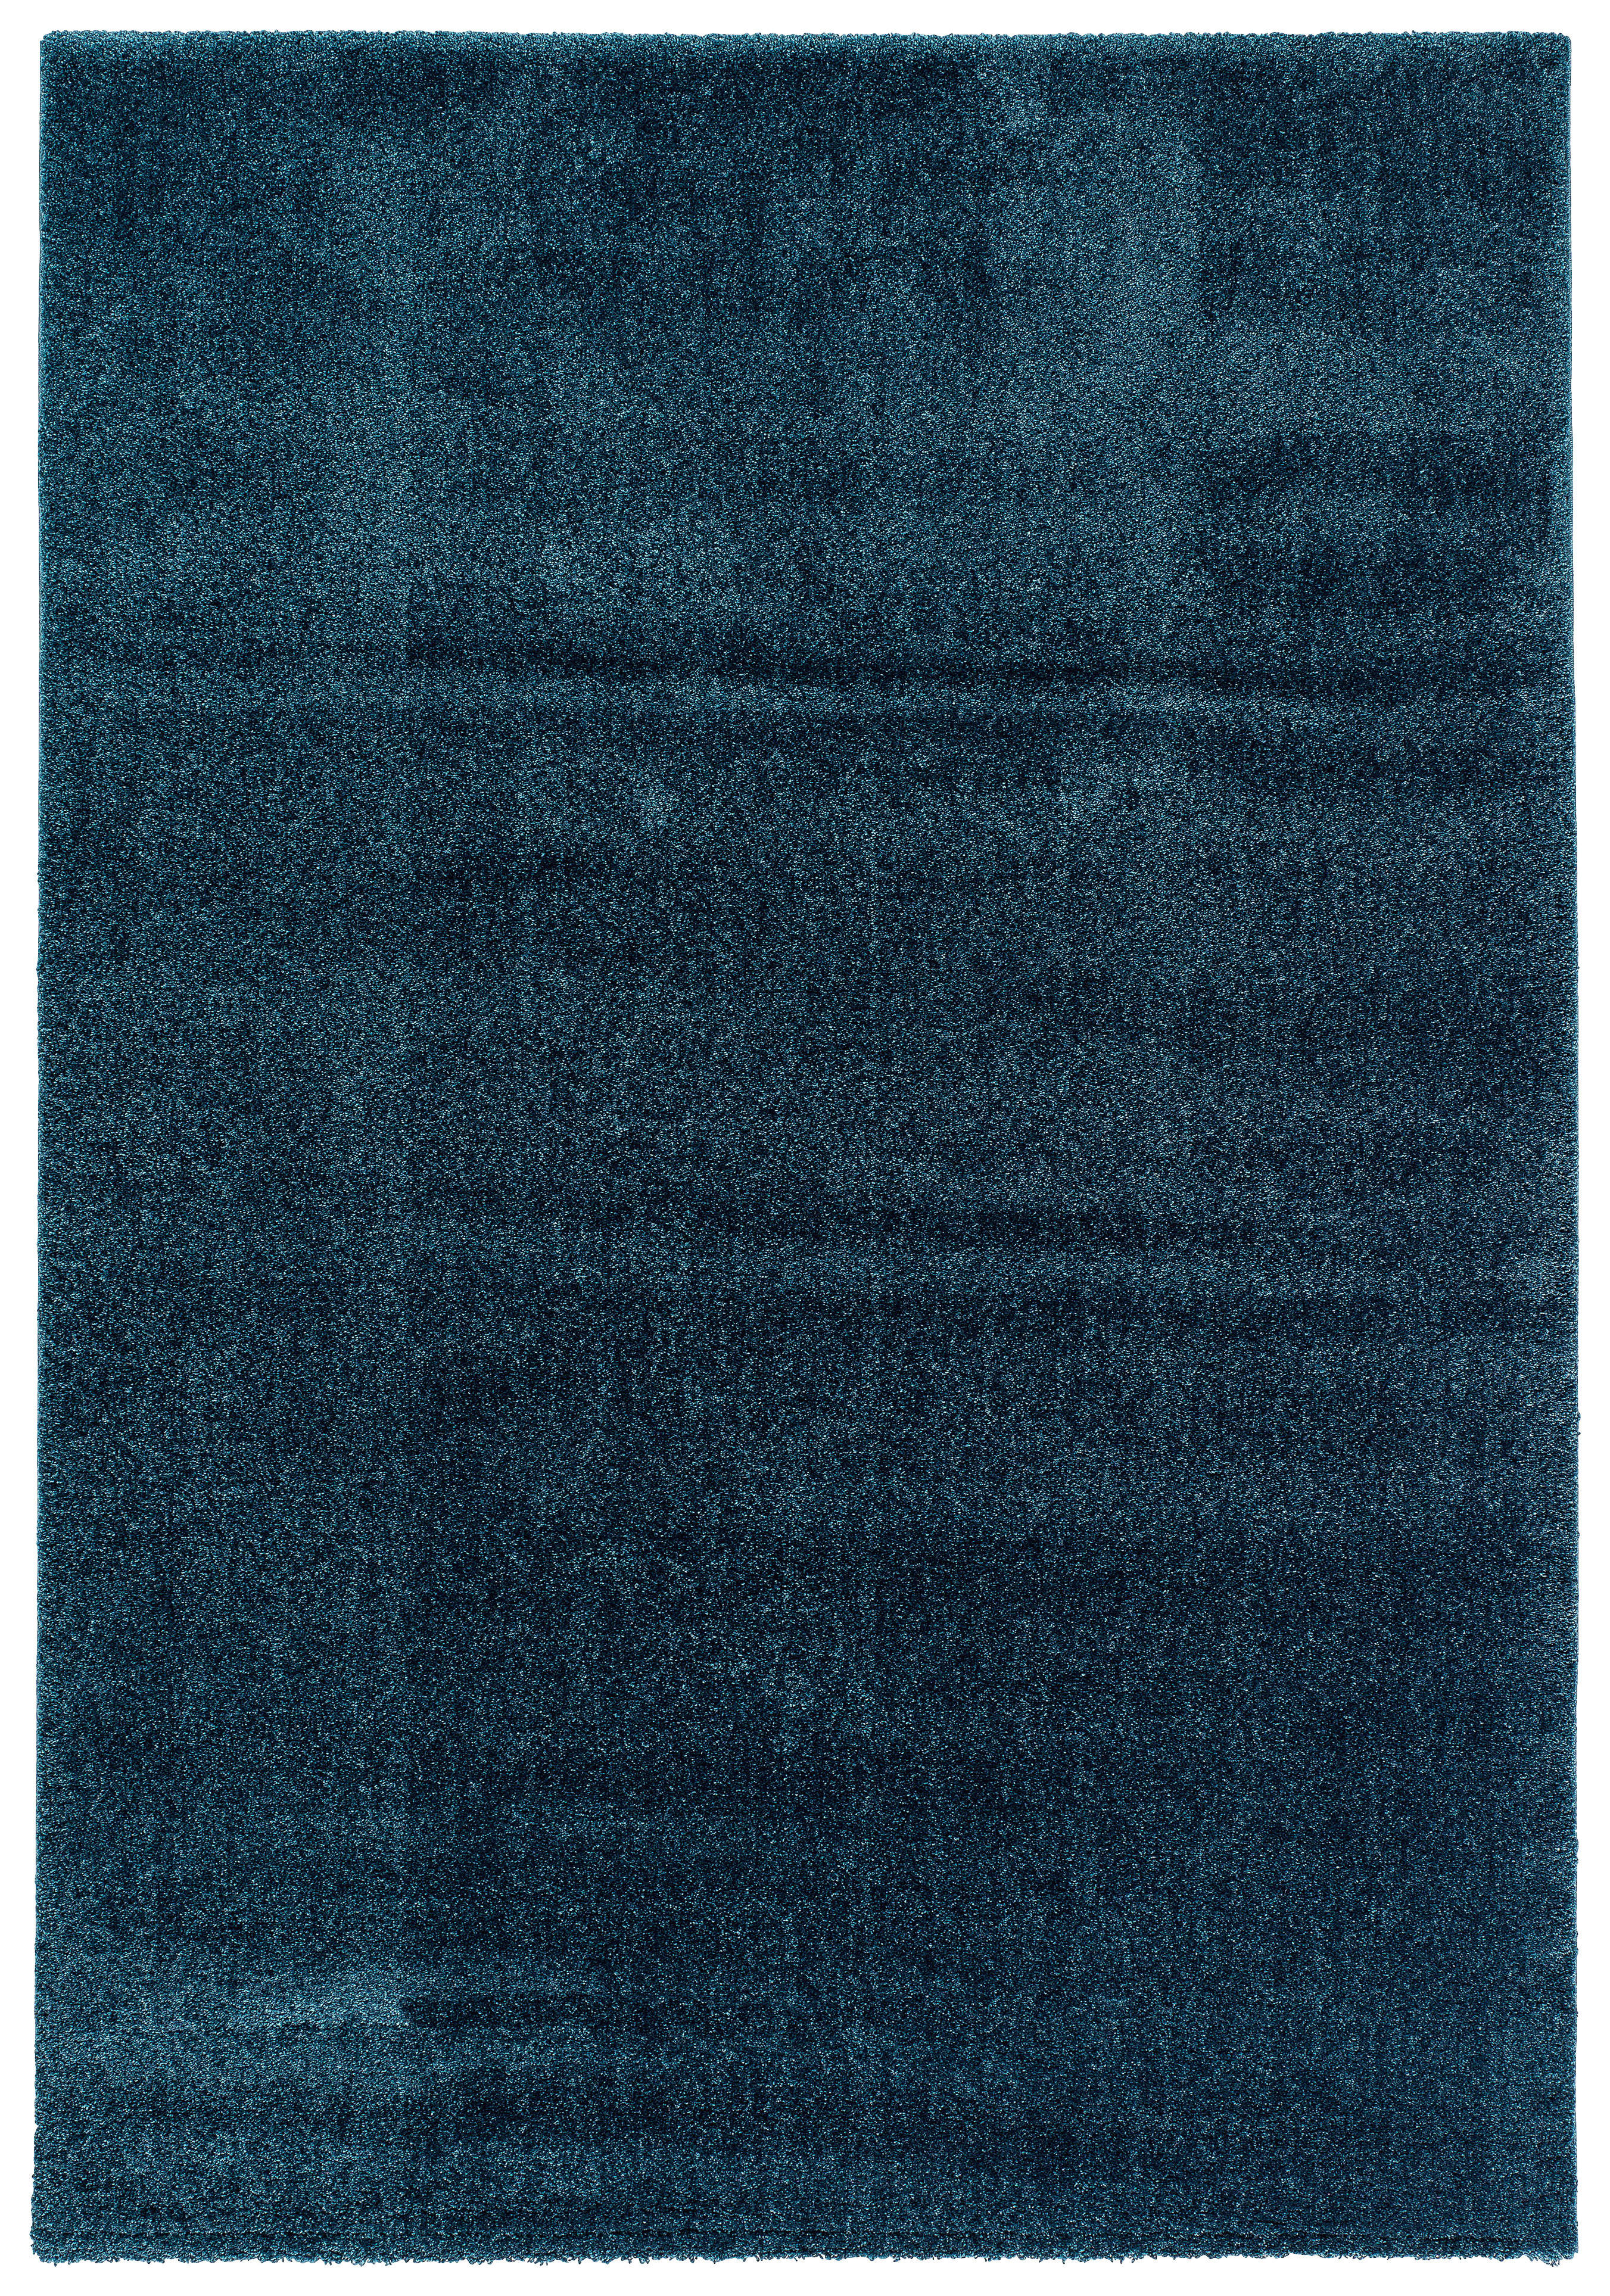 WEBTEPPICH 80/150 cm  - Blau, Basics, Textil (80/150cm) - Novel